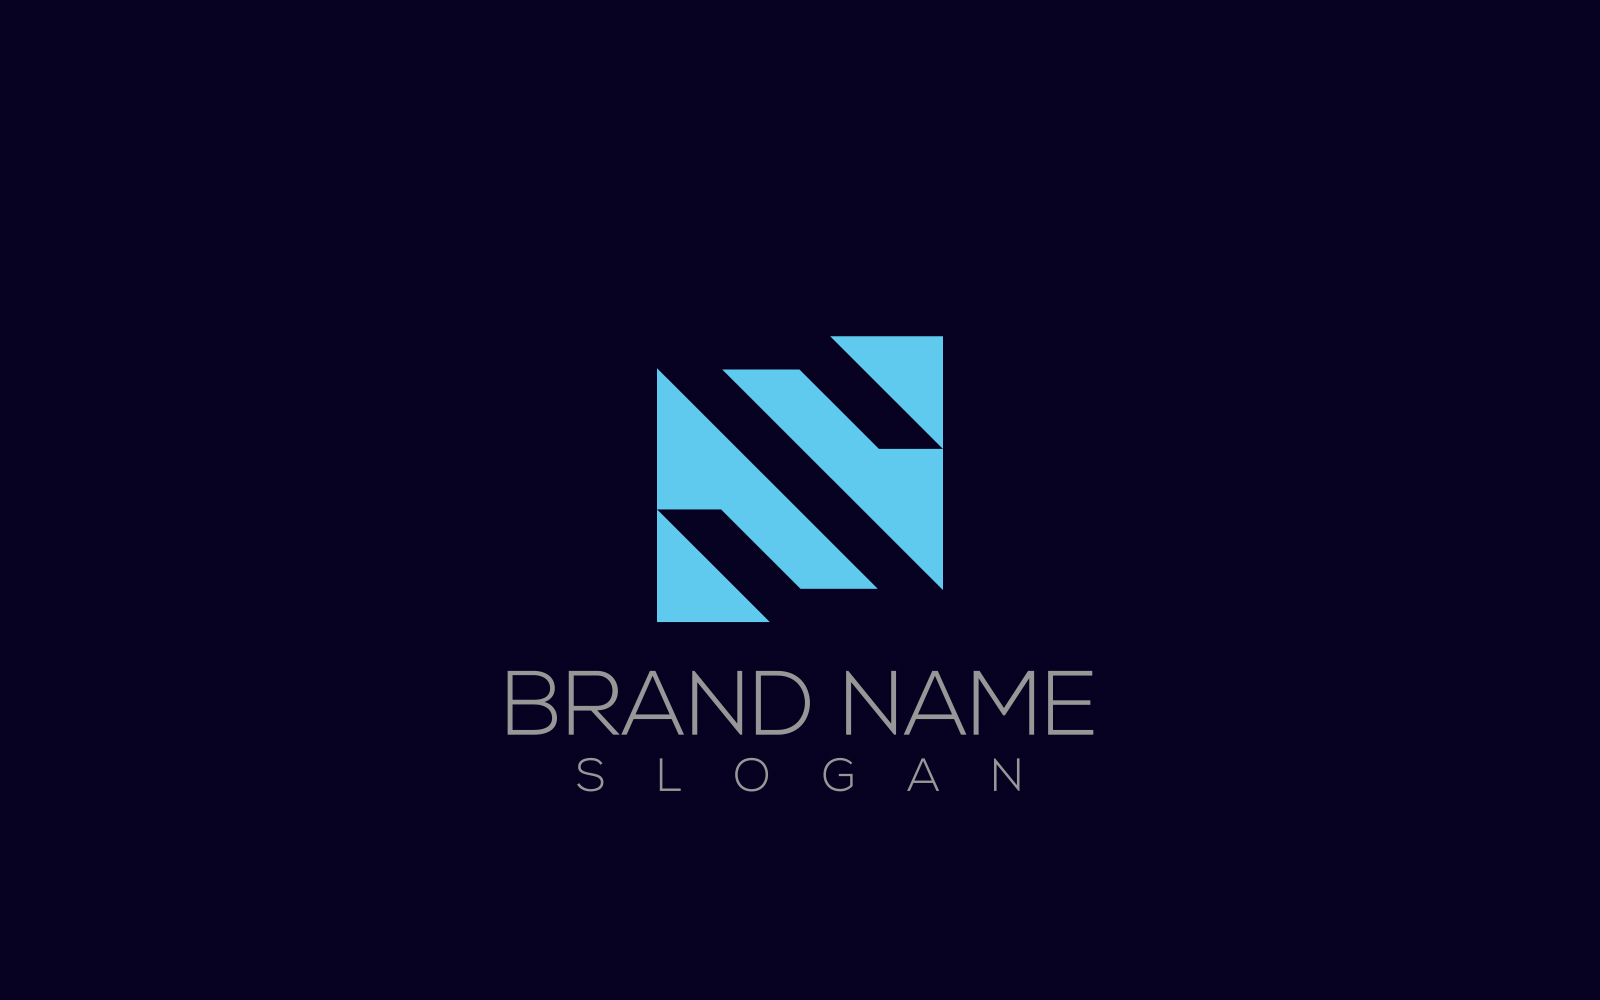 S Square | Premium Letter S Square Logo Design